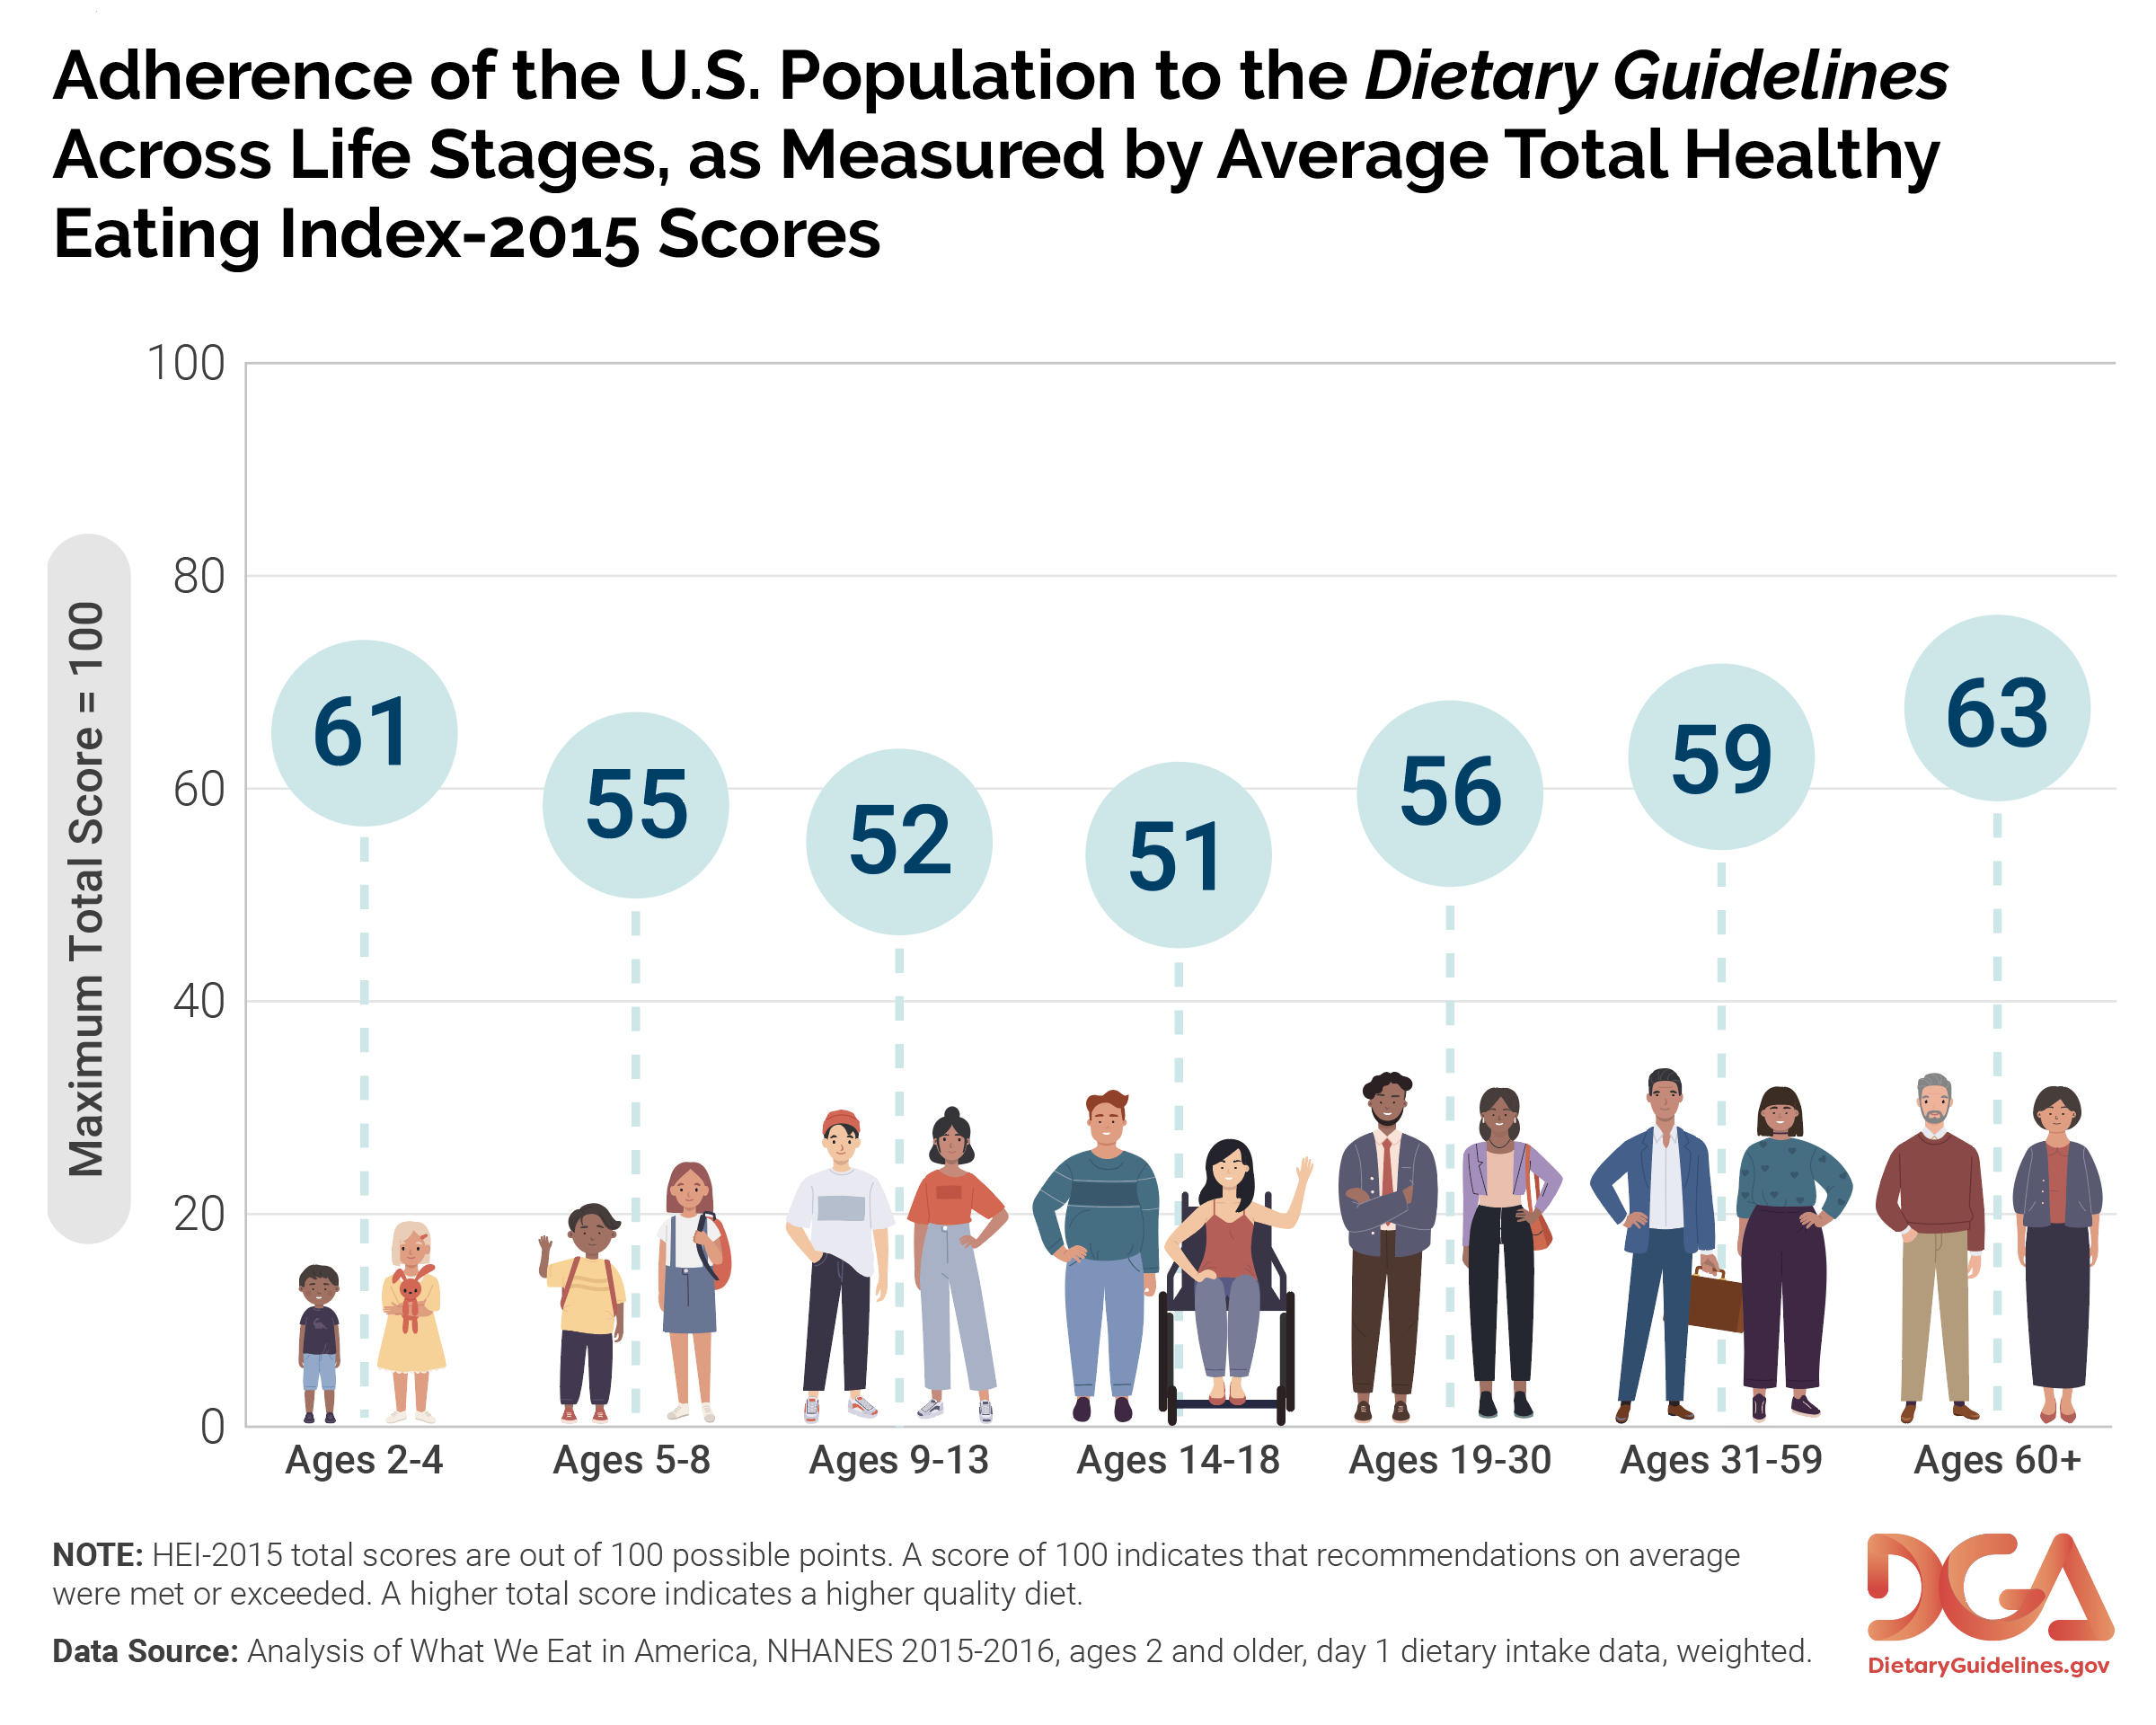 2015 DGA adherence chart